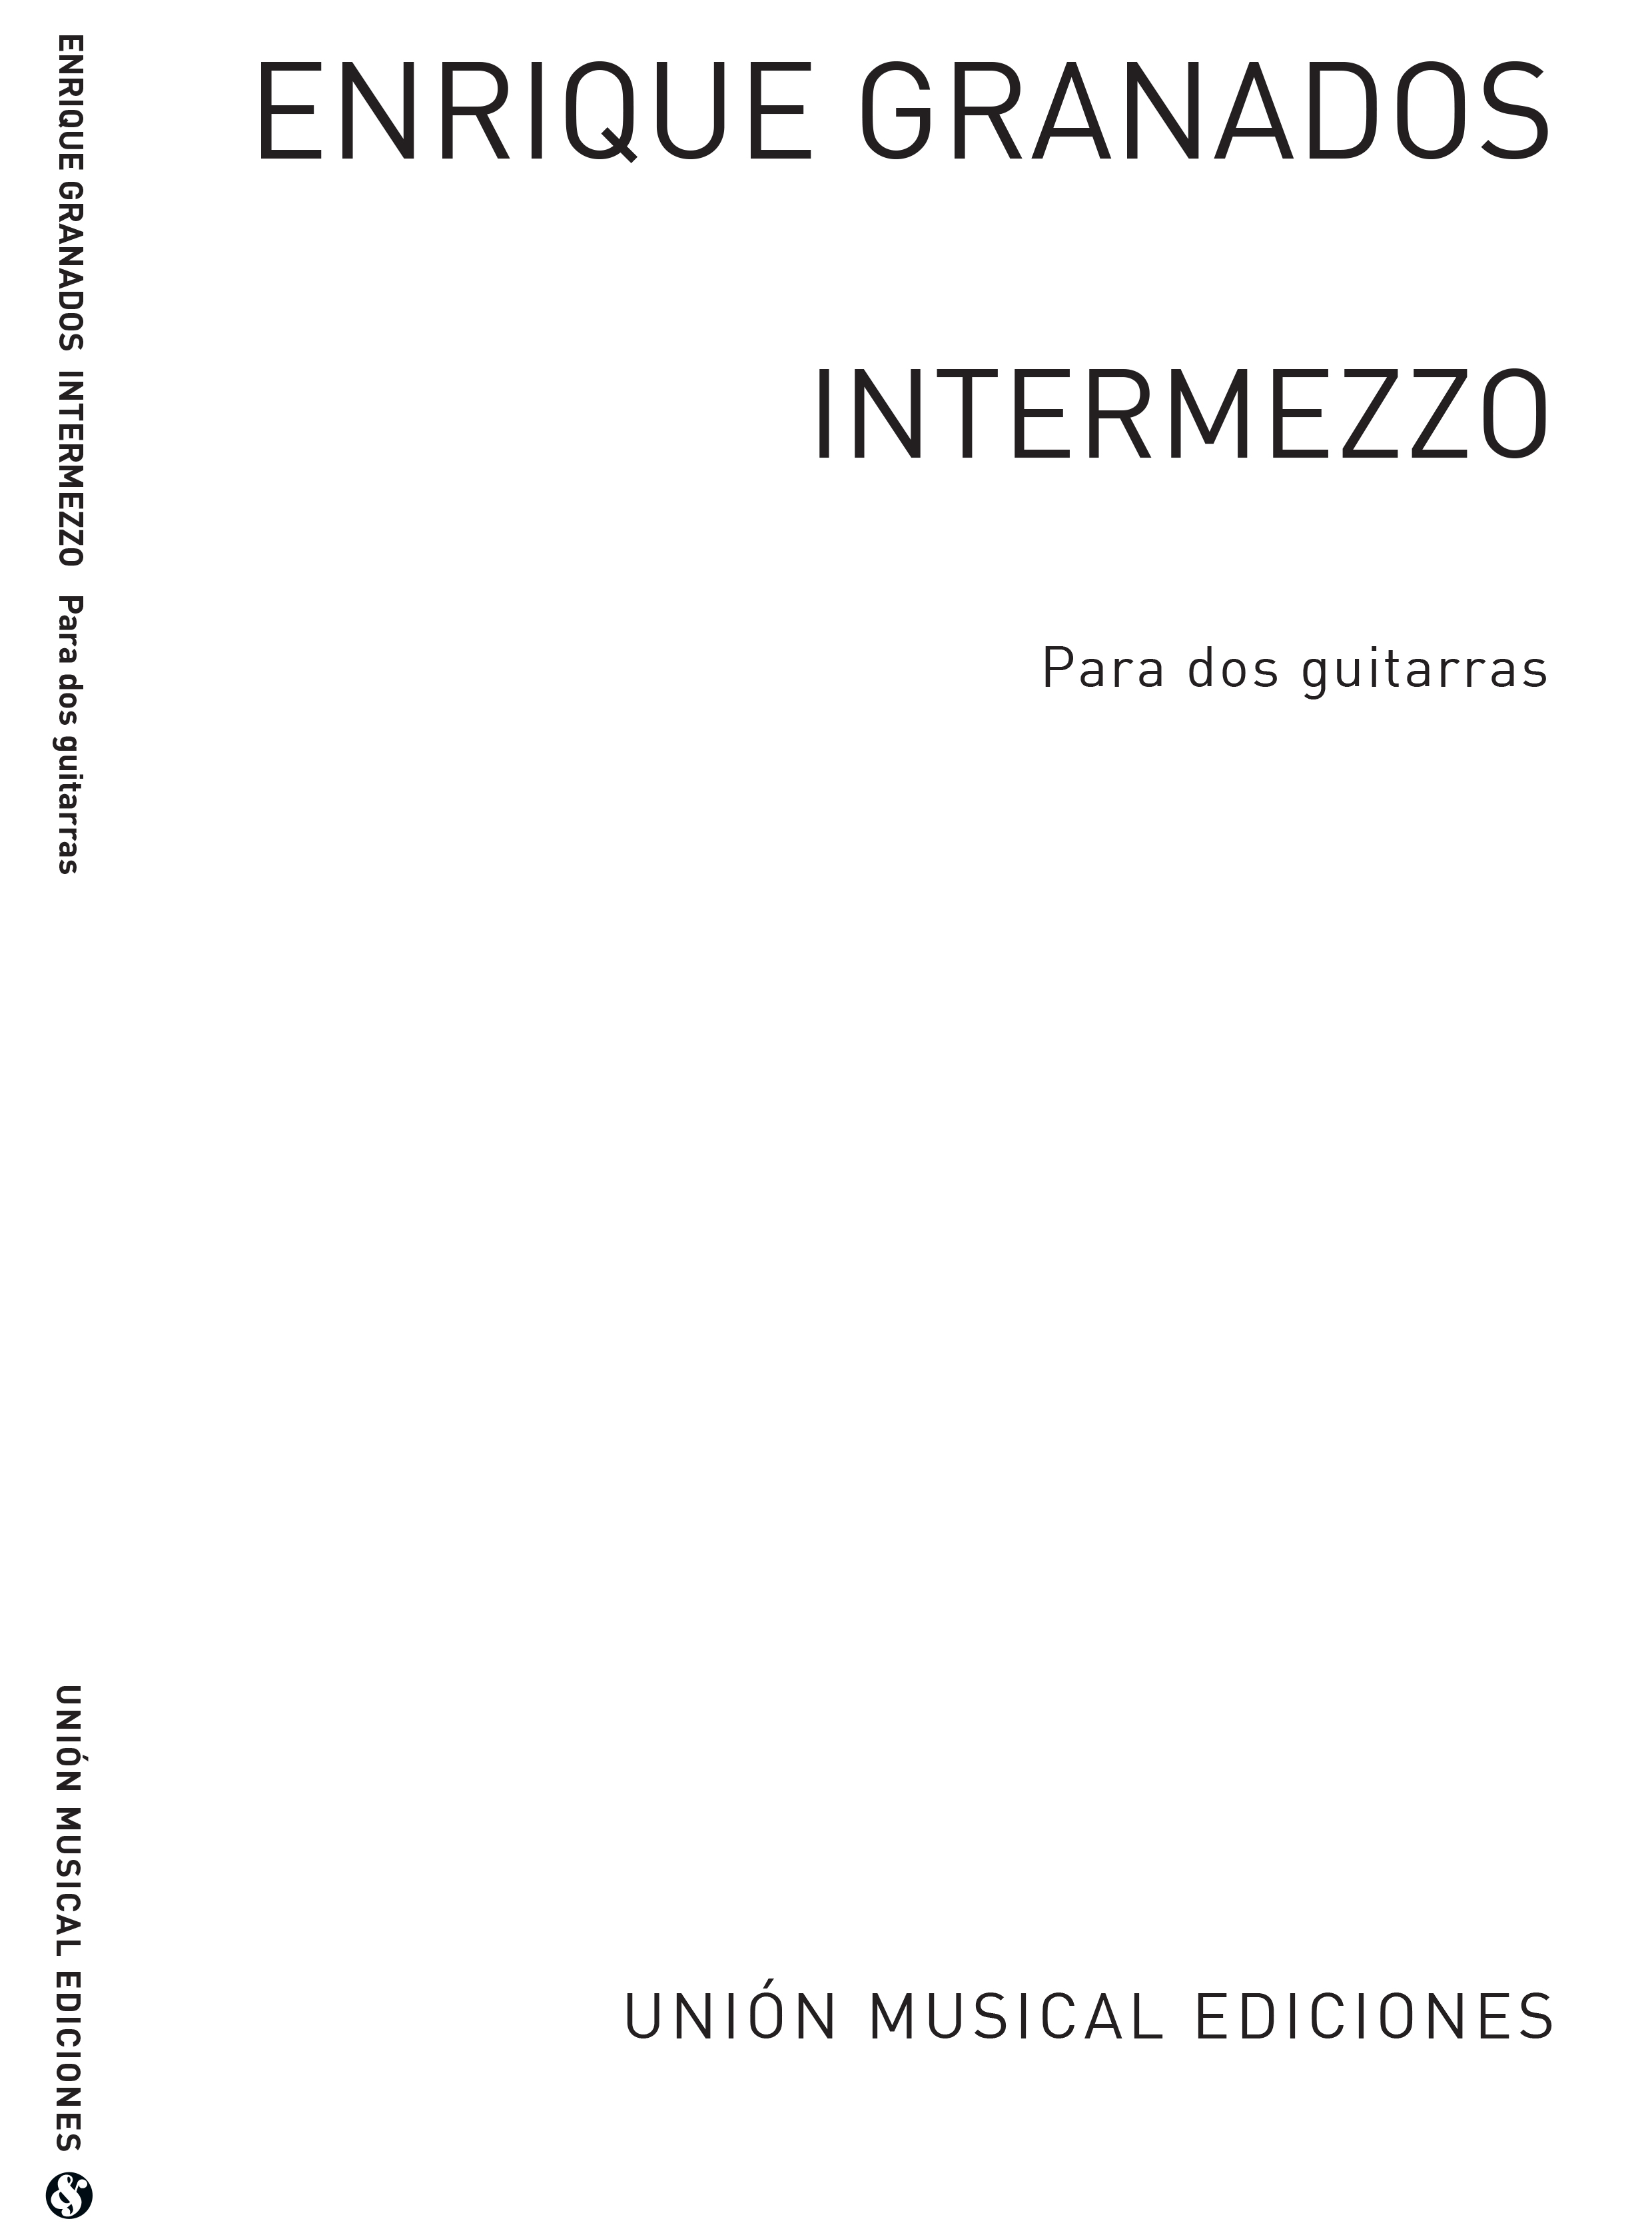 Granados: Intermezzo From Goyescas (Azpiazu) for 2 Guitars